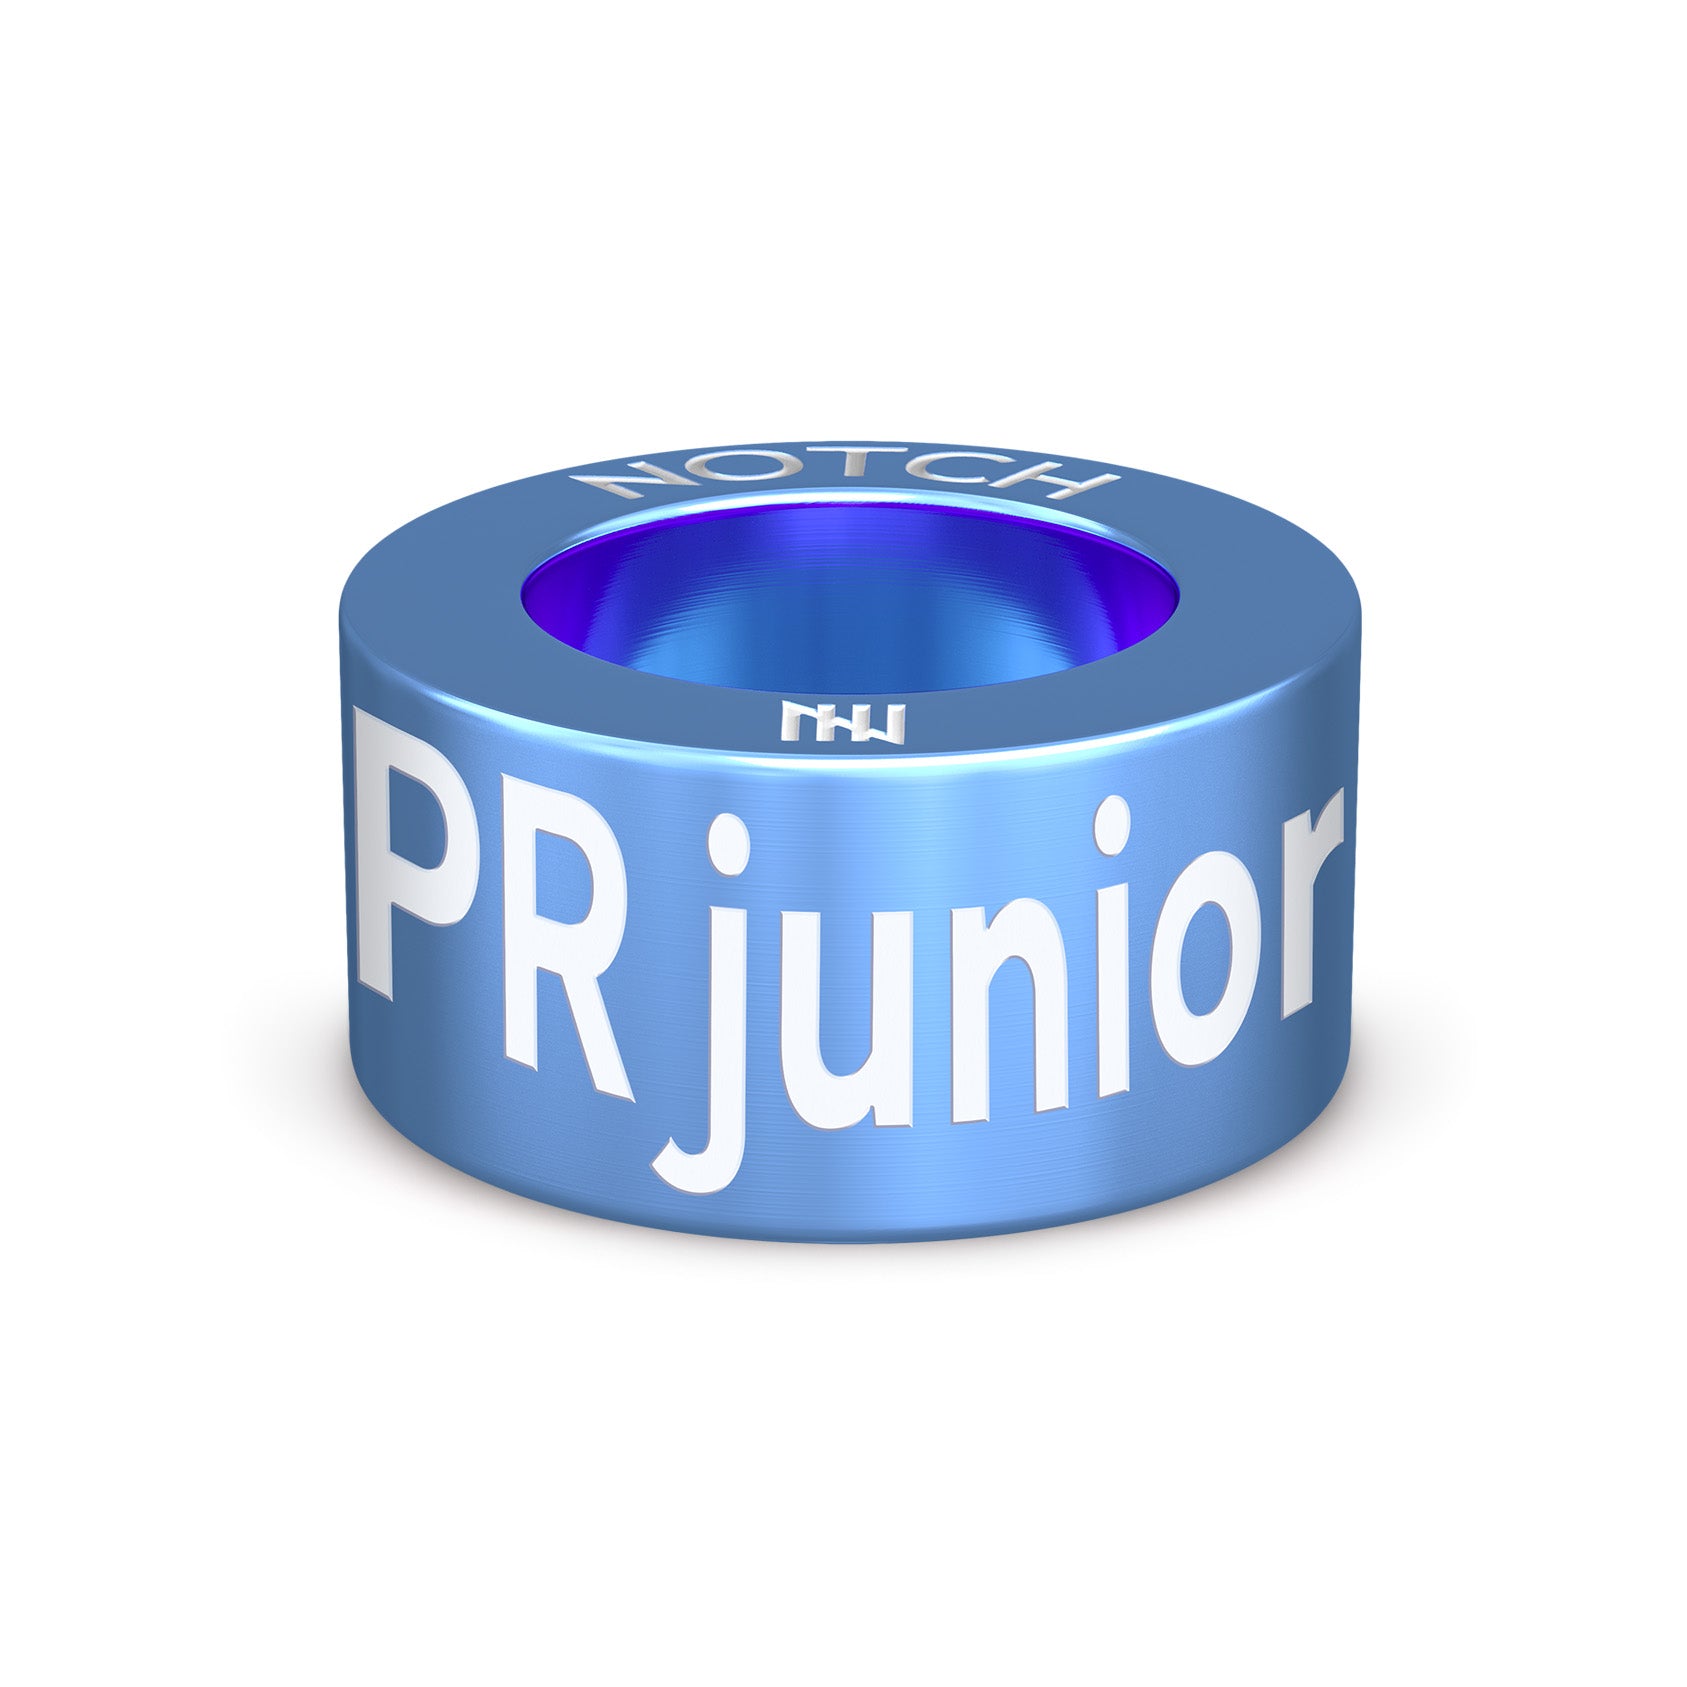 PR junior NOTCH Charm